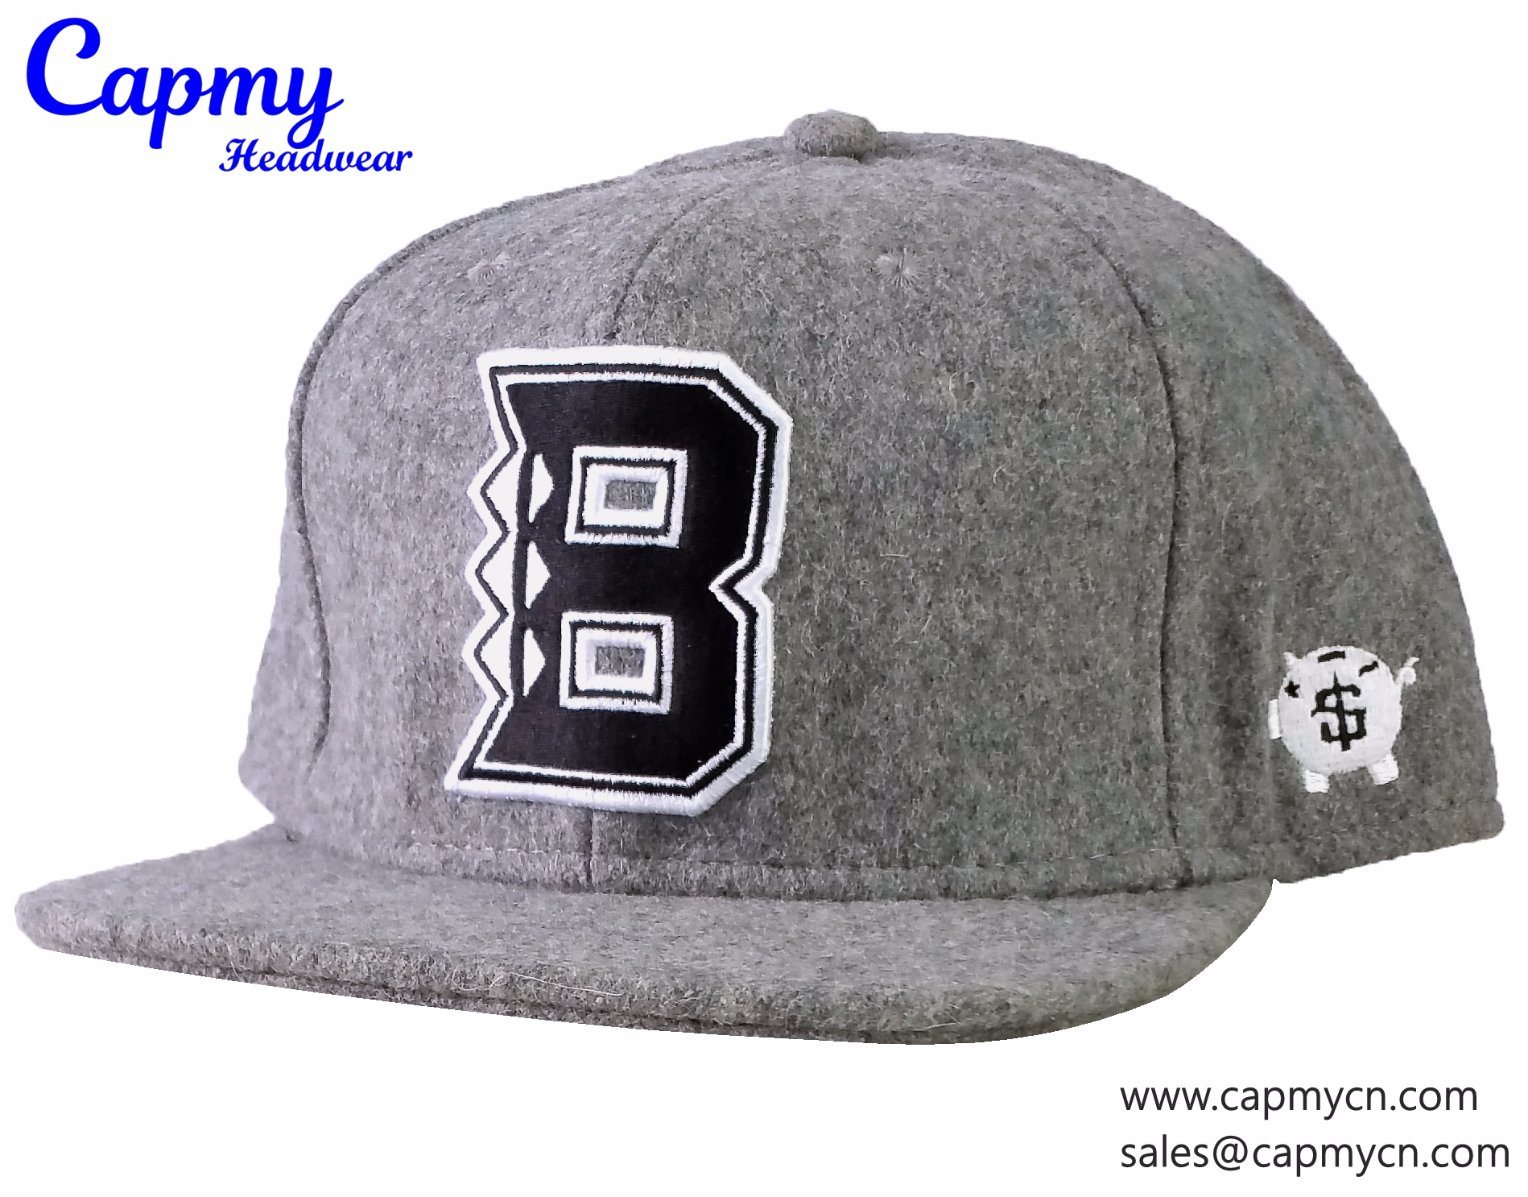 New Design Grey Wool/Blend Material Snapback Cap Hat